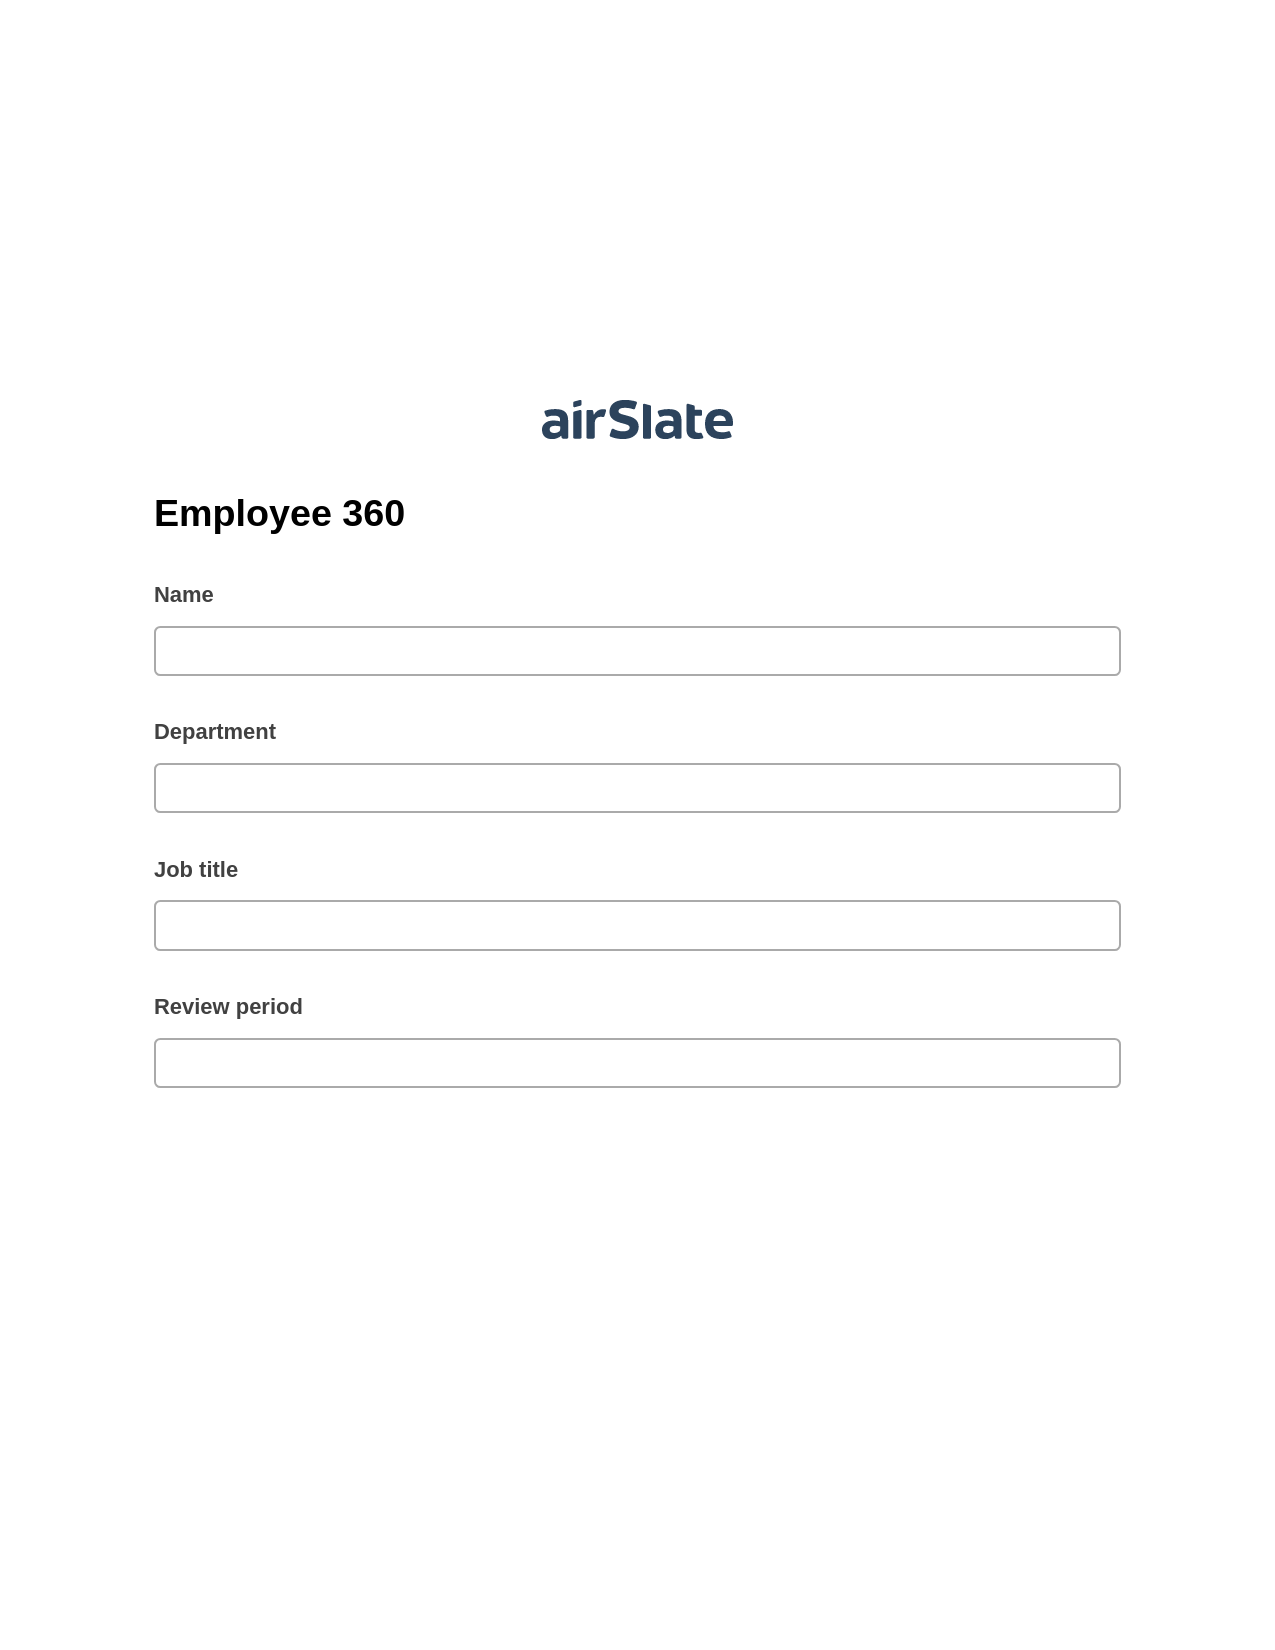 Multirole Employee 360 Pre-fill from CSV File Bot, Invoke Salesforce Process Bot, Archive to SharePoint Folder Bot